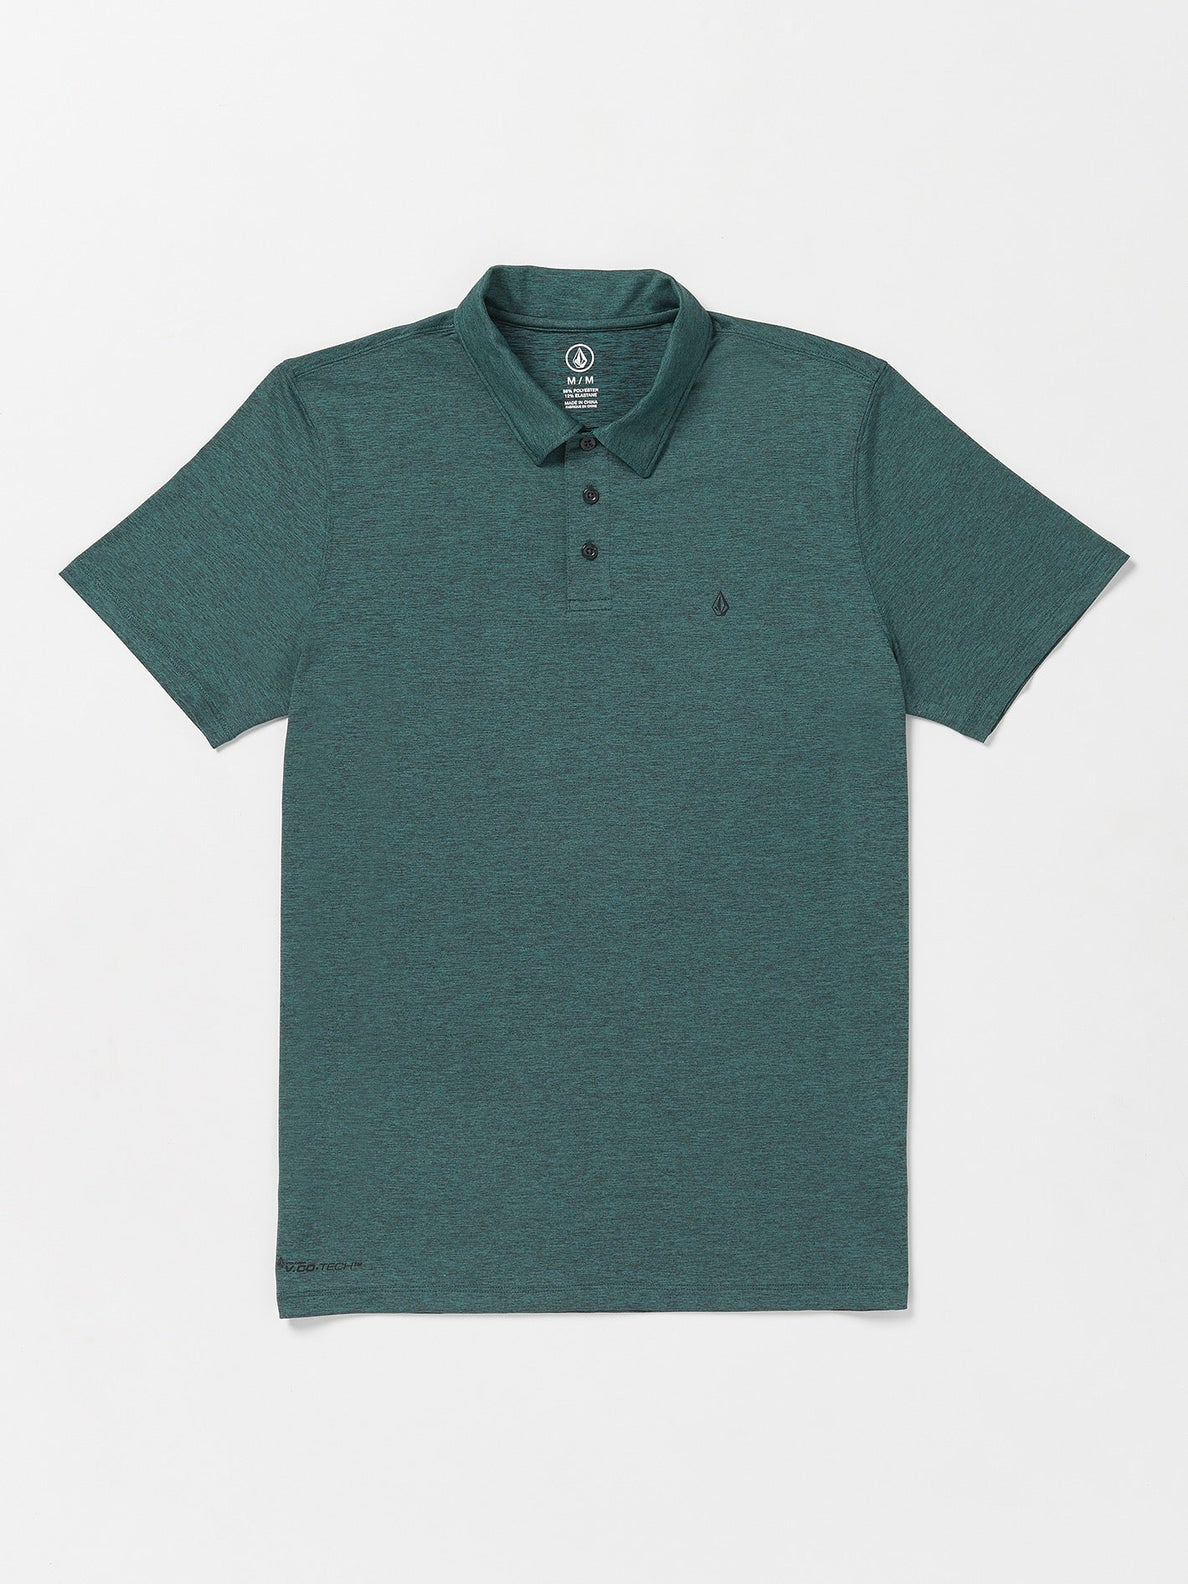 Hazard Pro Polo Short Sleeve Shirt - Ranger Green